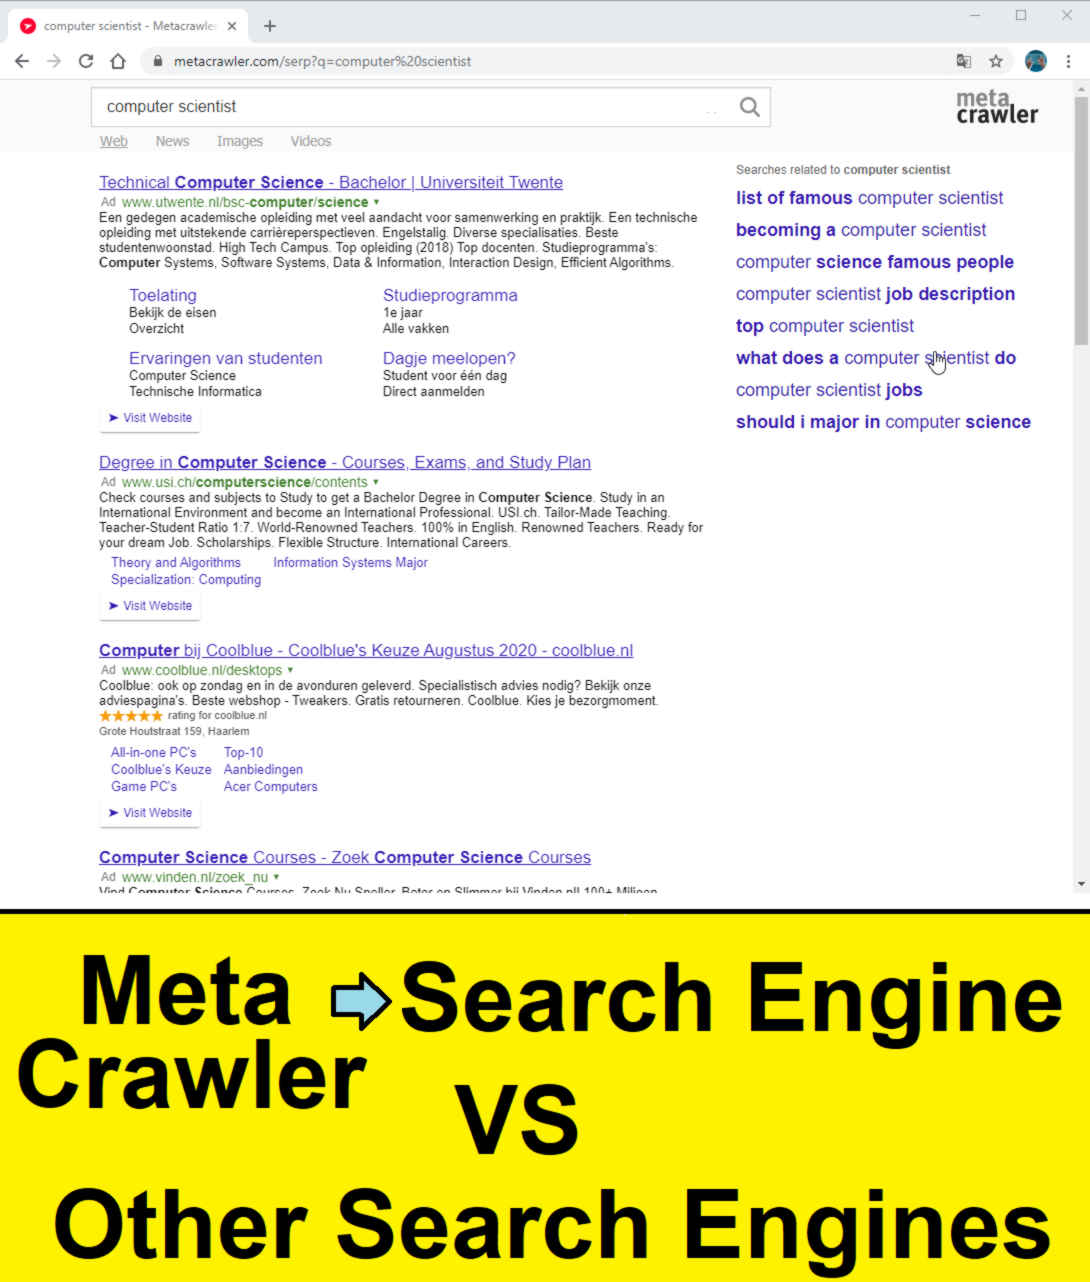 compare metacrawler search engine